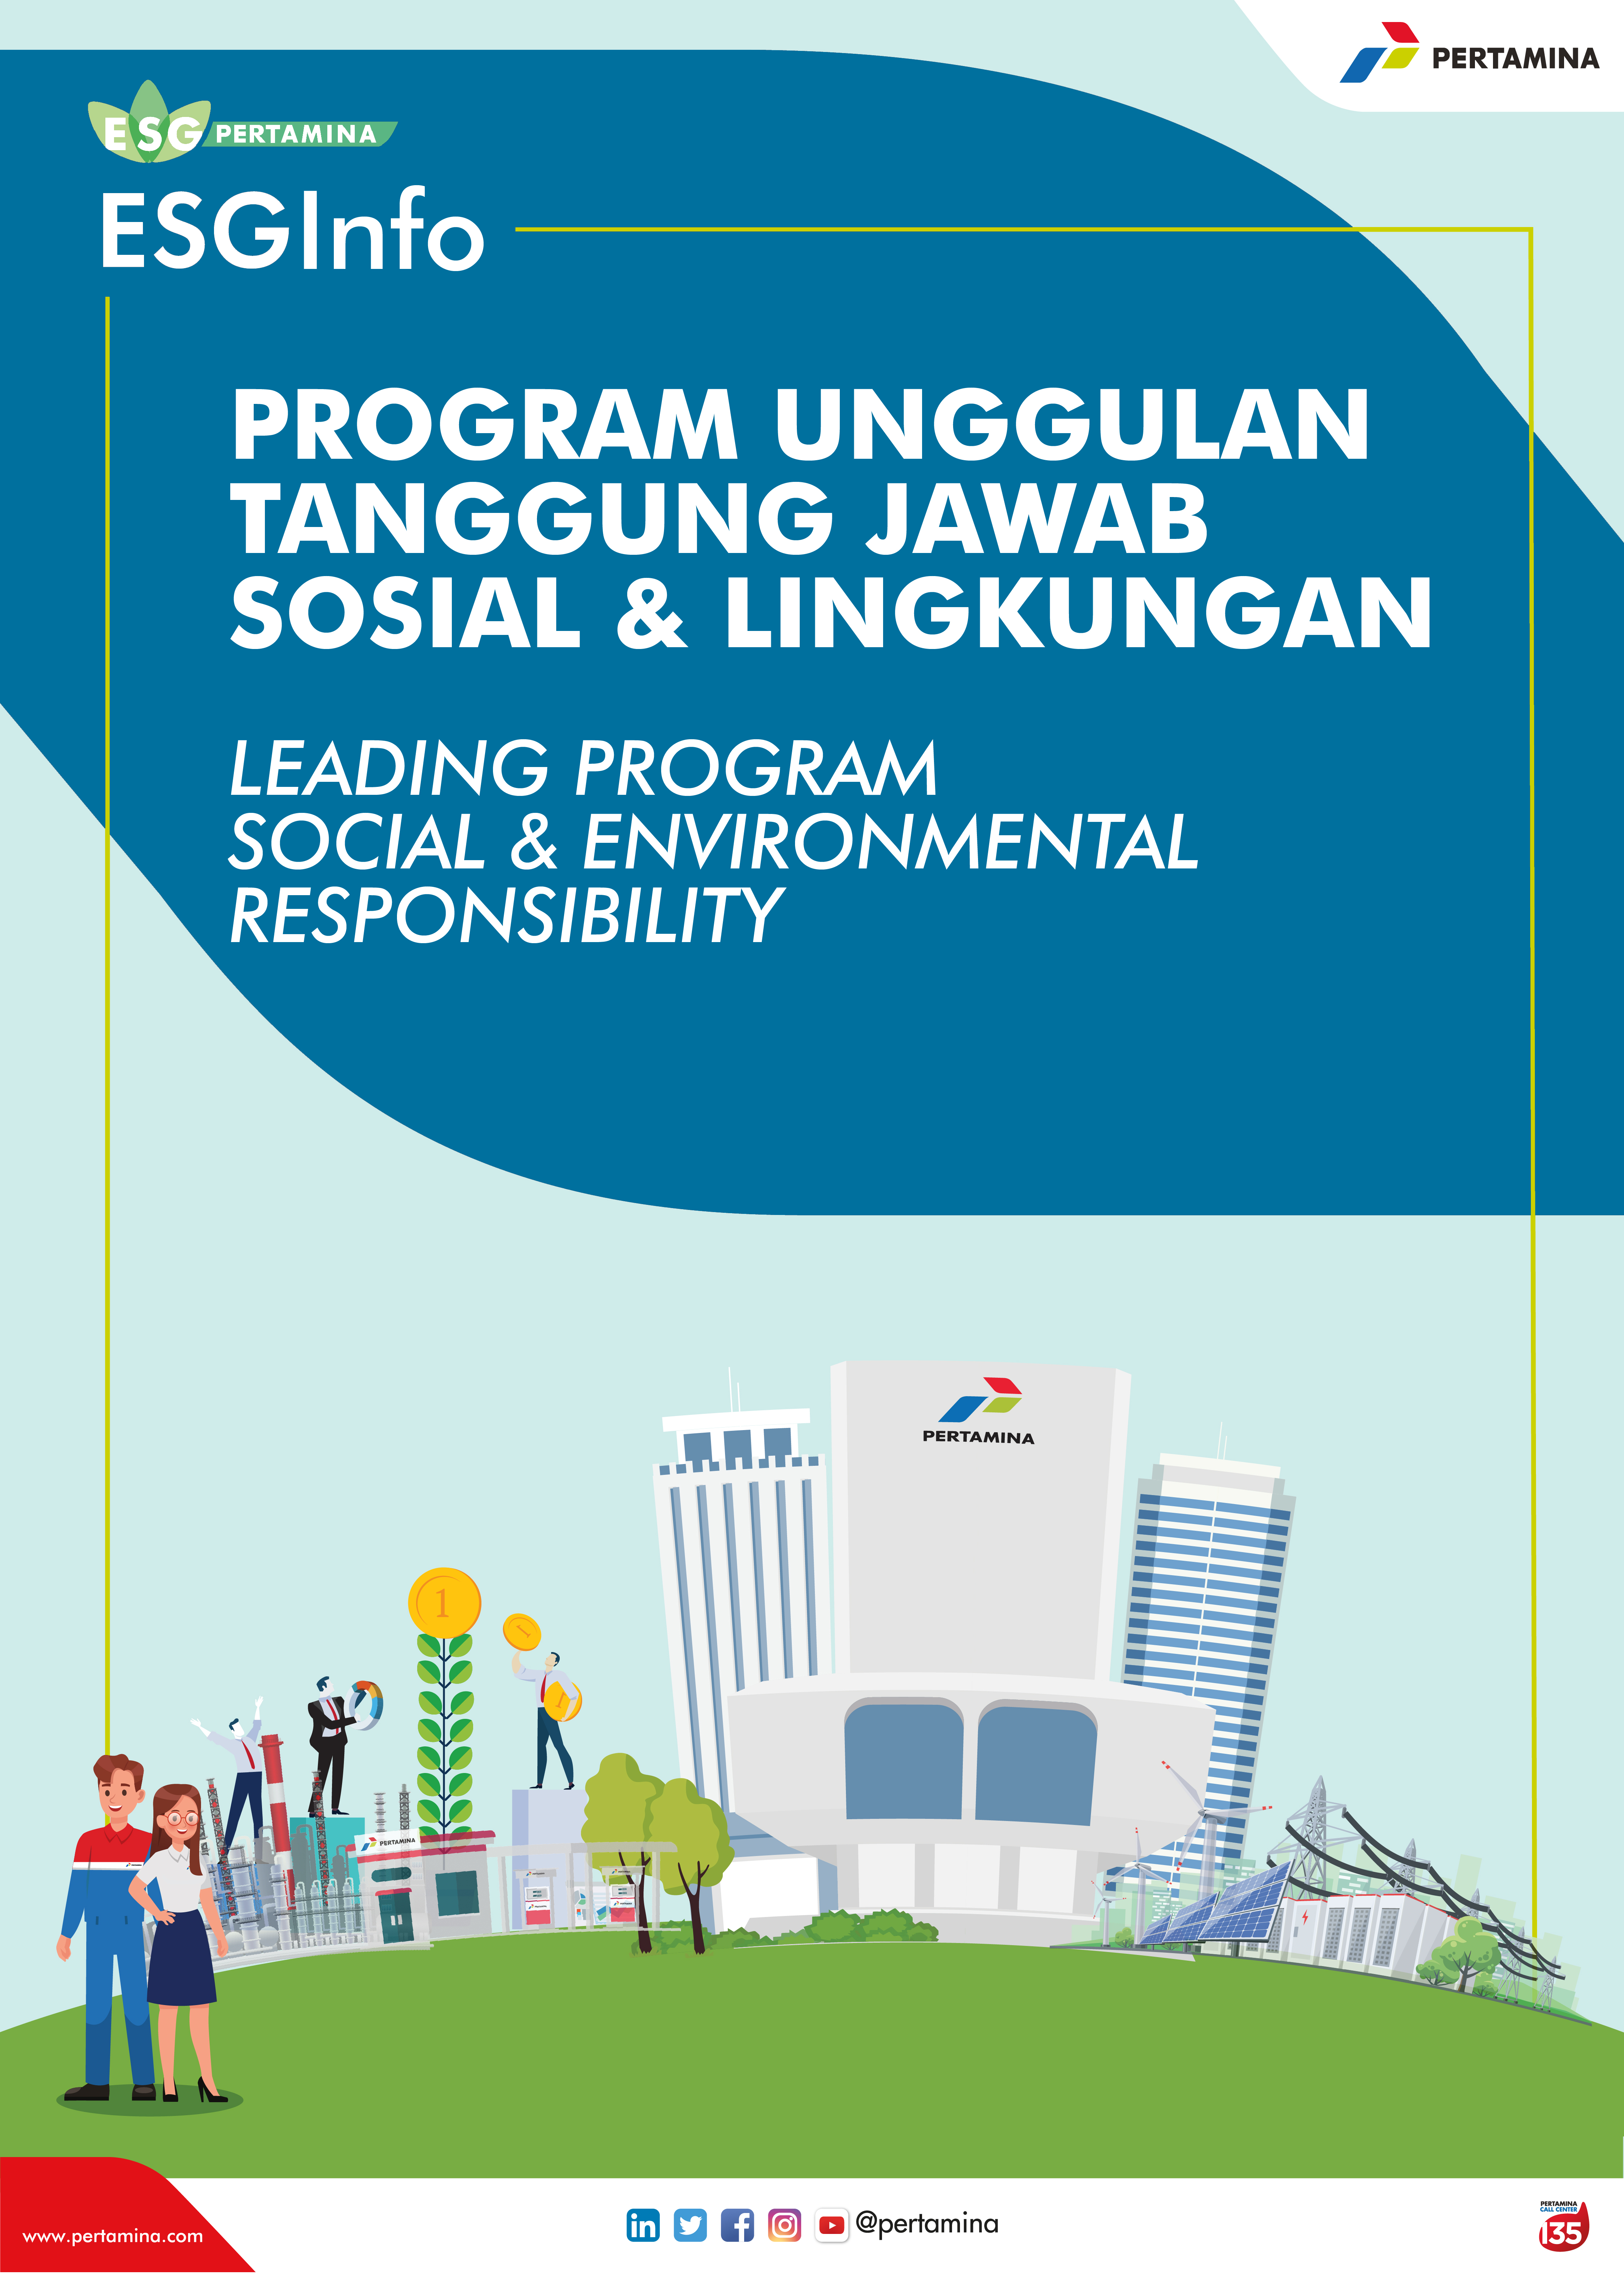 PERTAMINA Leading Programs Social & Environmental Responsibility